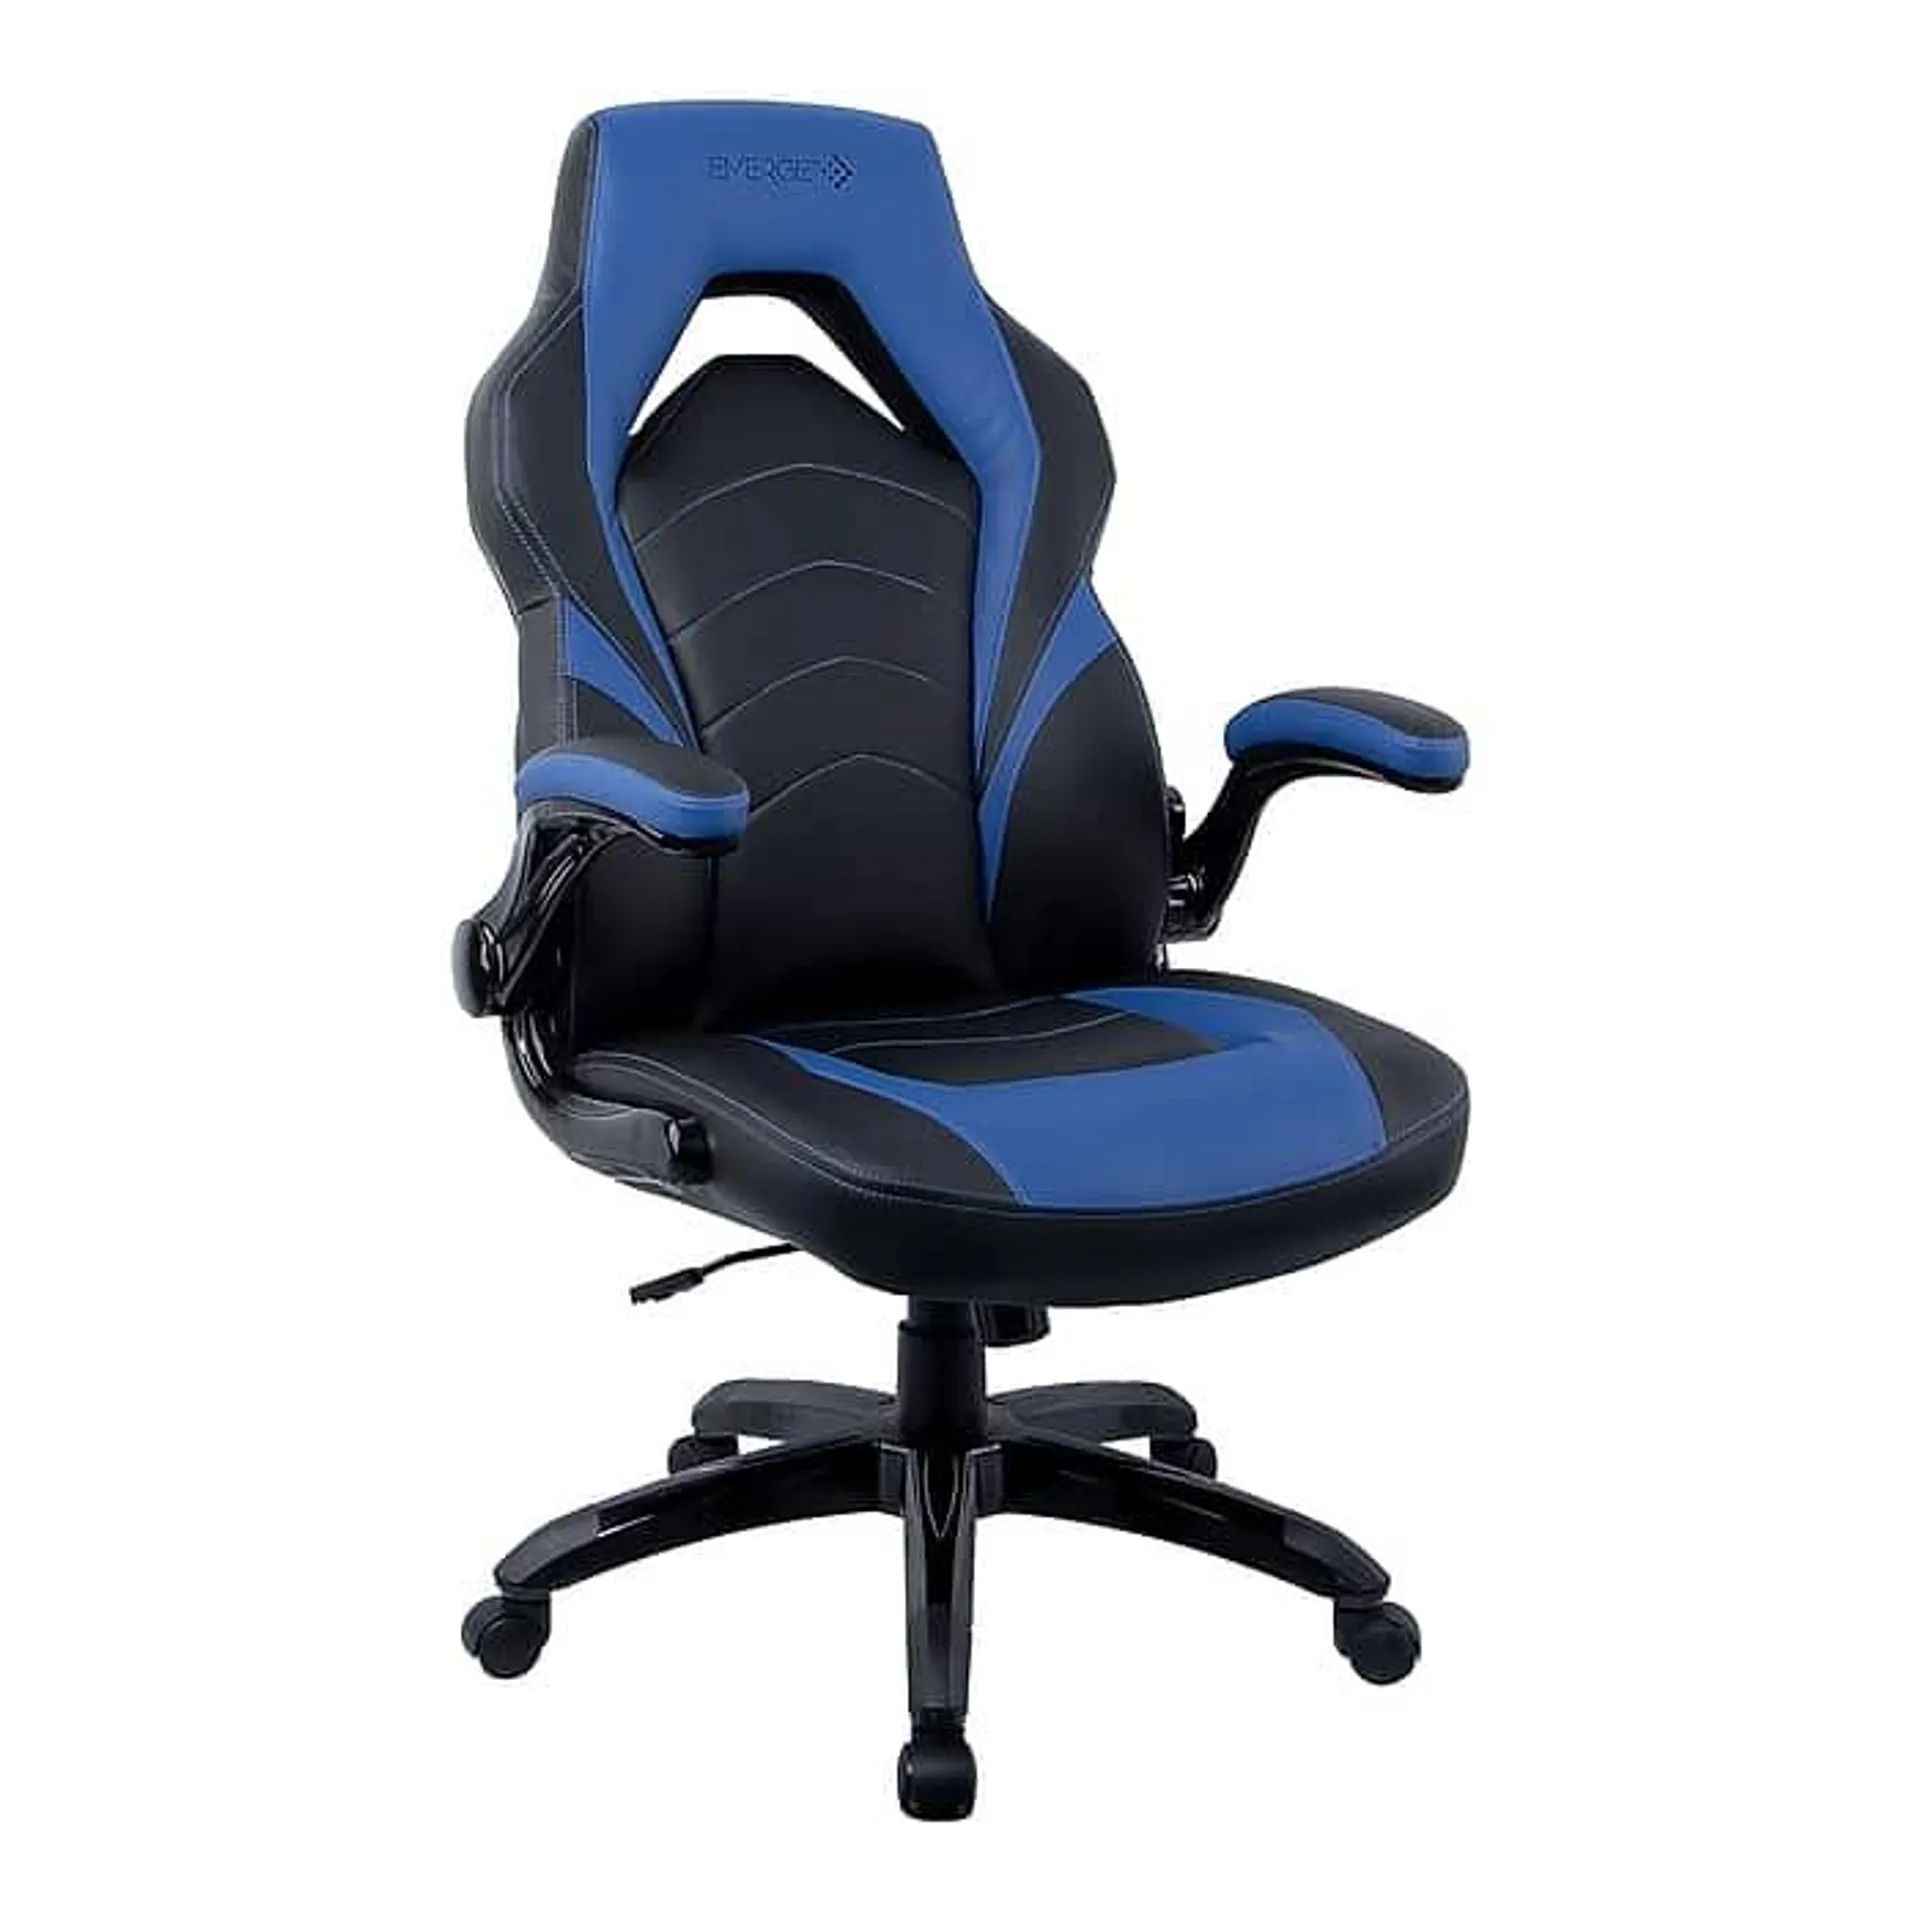 Staples Emerge Vortex Bonded Leather Ergonomic Gaming Chair,